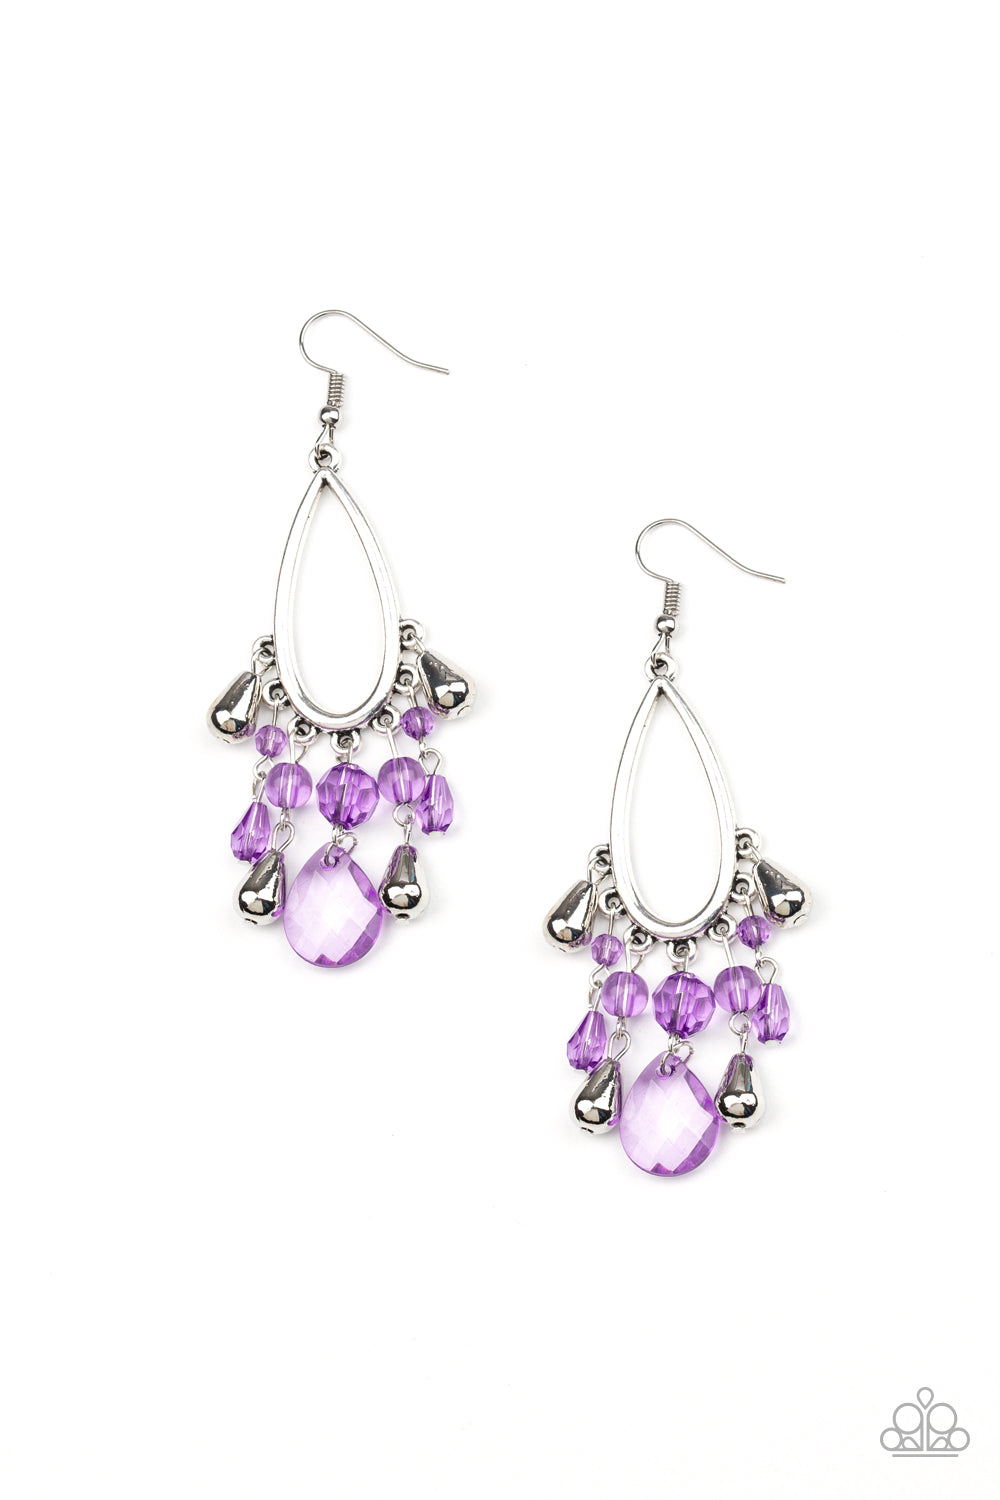 Paparazzi Accessories - Summer Catch - Purple Earrings - Alies Bling Bar